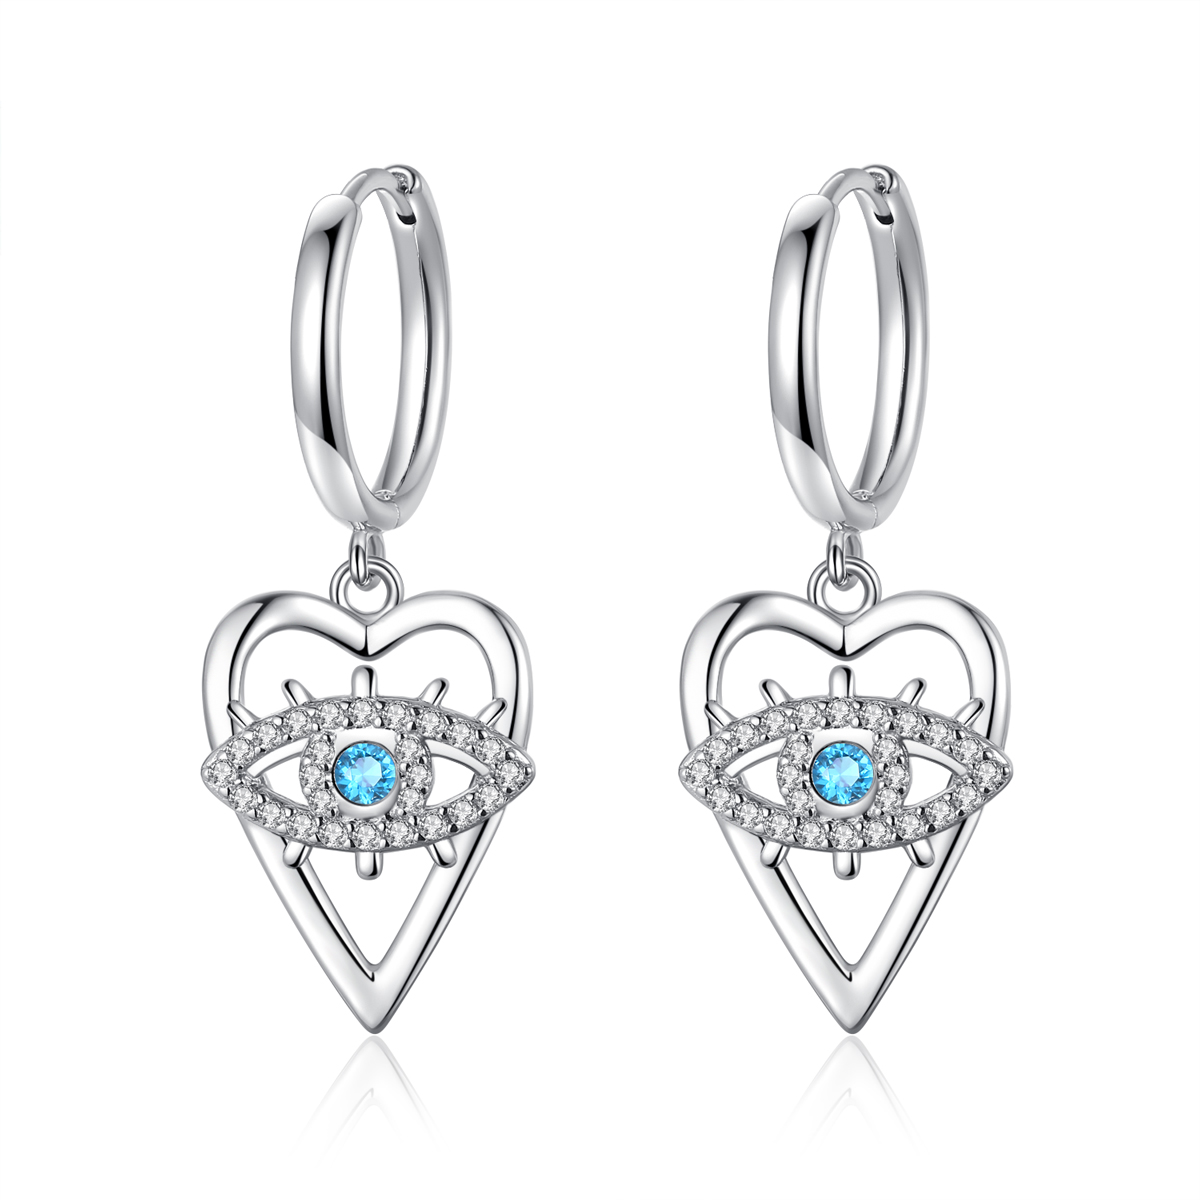 Merryshine Jewelry High Quality Fashion S925 Sterling Silver Blue Eye Stud Earrings Hoop Earrings